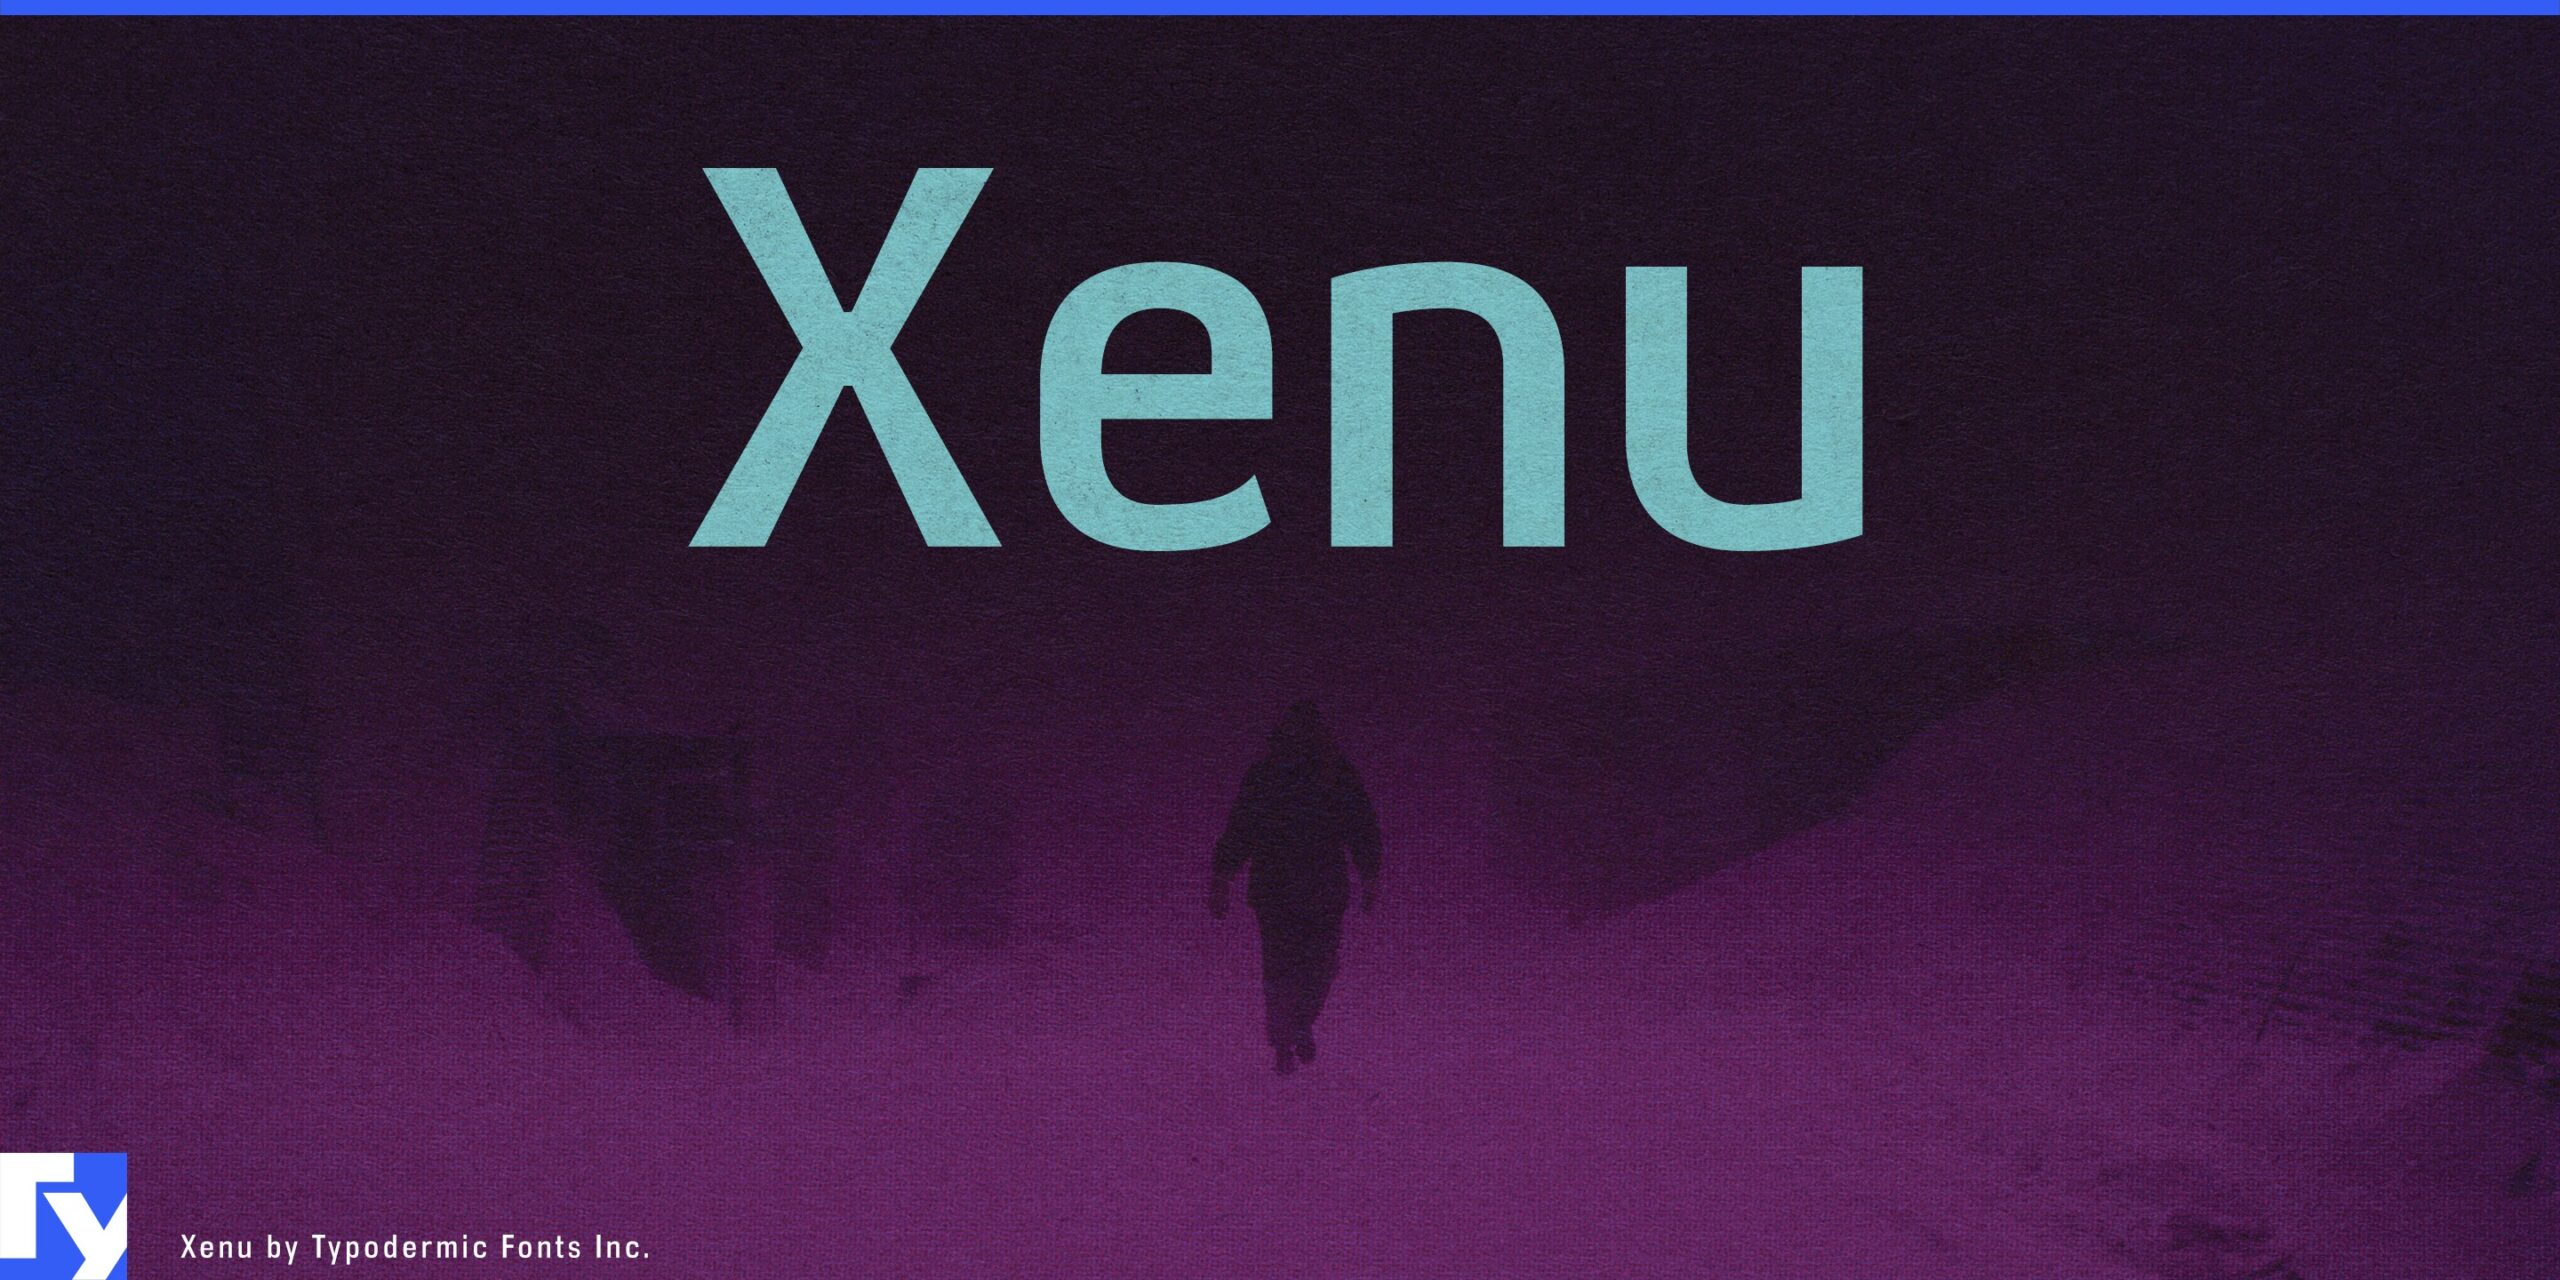 Technological Elegance: Xenu Font's Sleek Lines